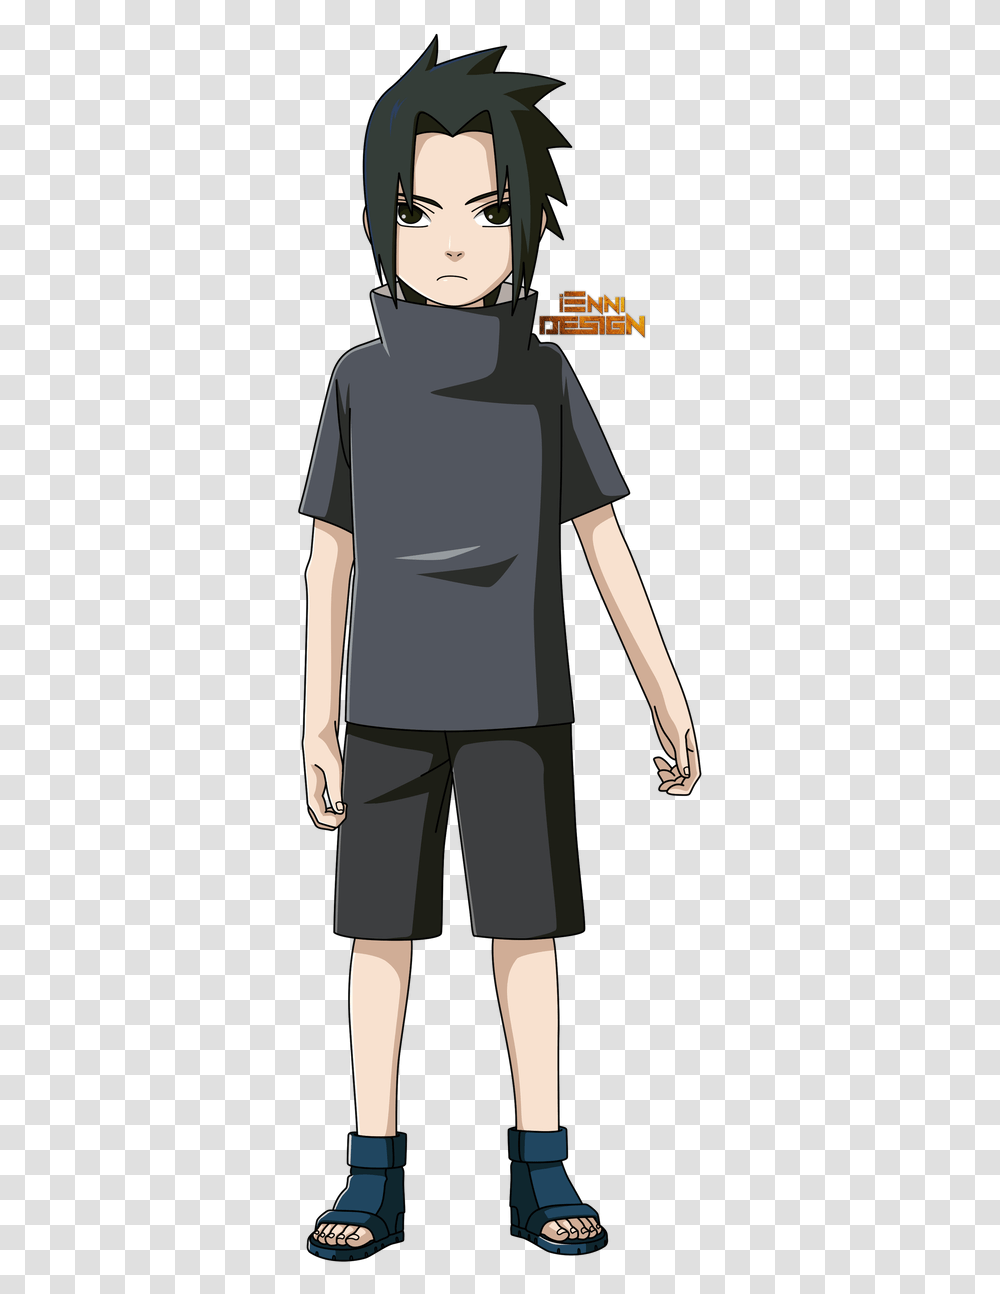 Sasuke Uchiha Iennidesign, Sleeve, Person, T-Shirt Transparent Png